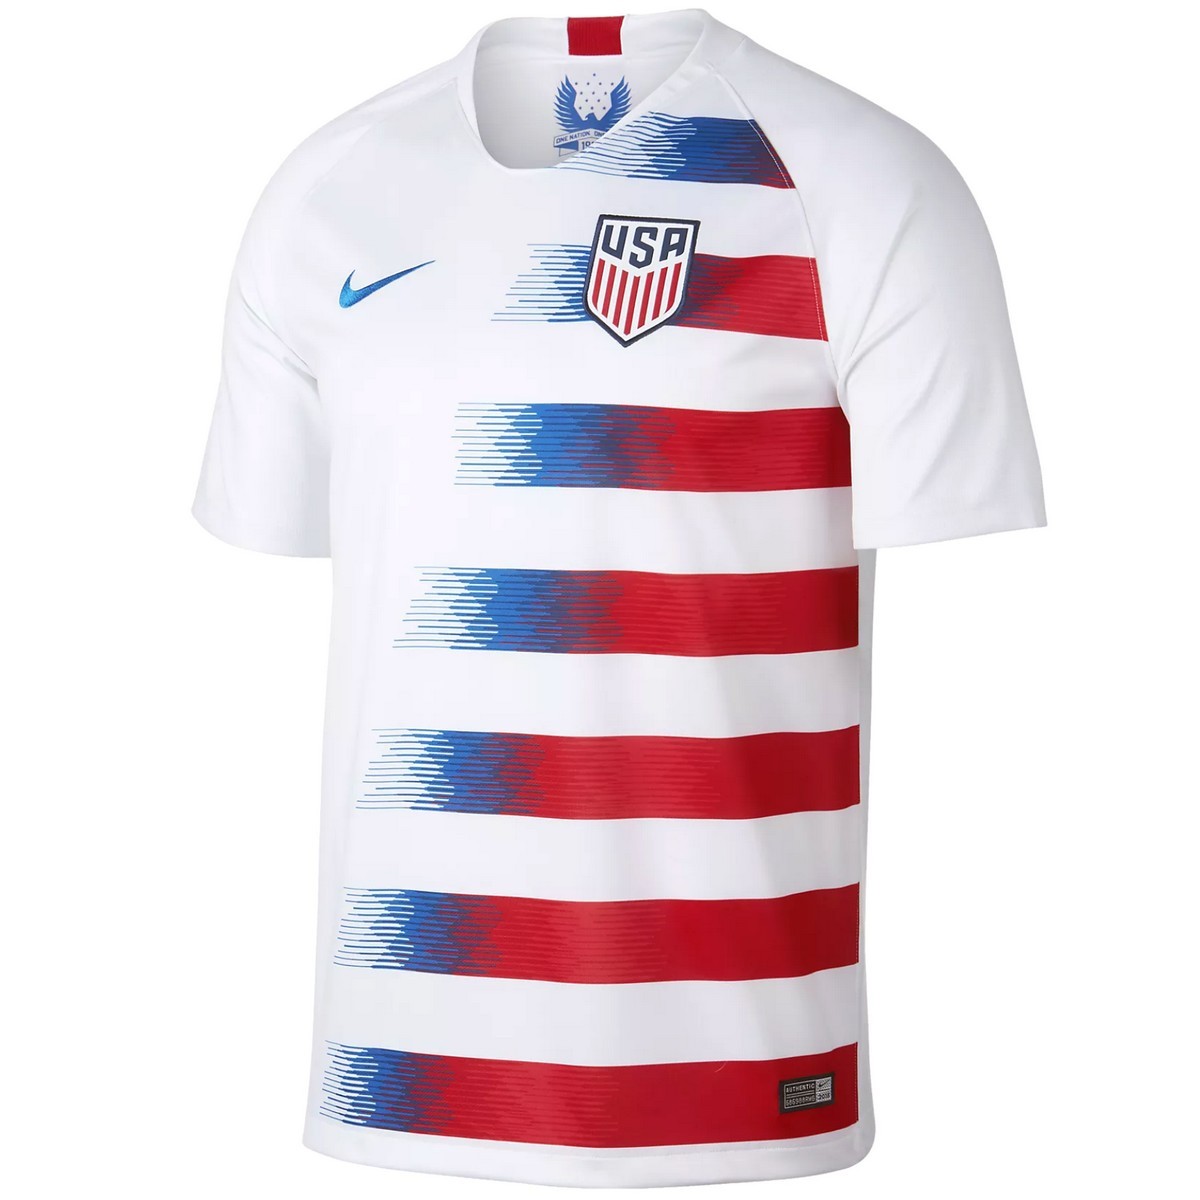 USA national team Home football shirt 